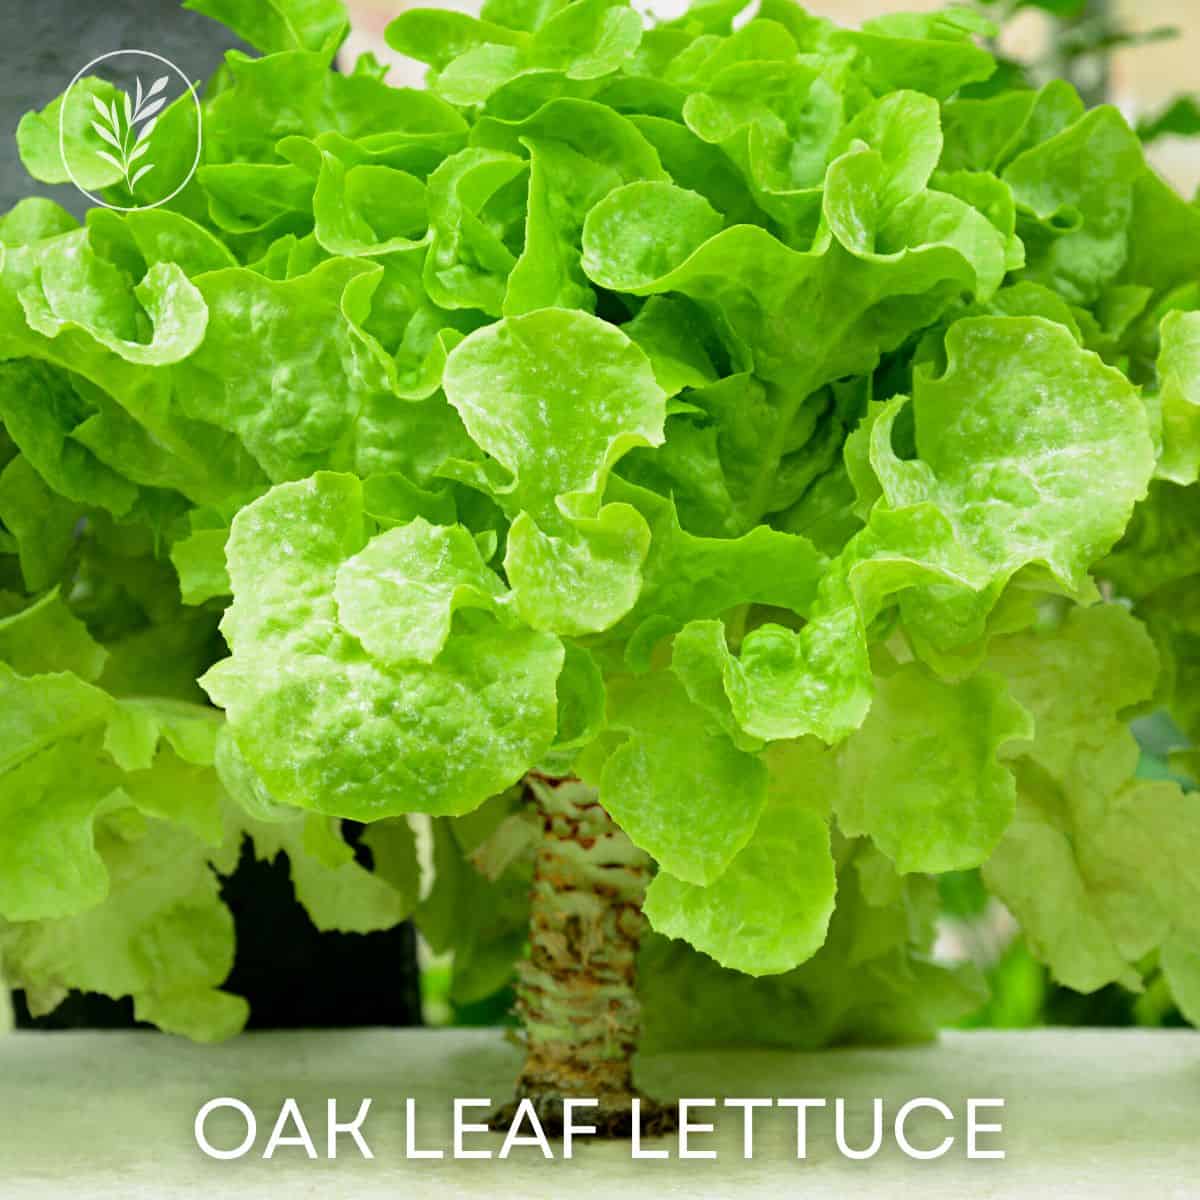 Oak leaf lettuce via @home4theharvest